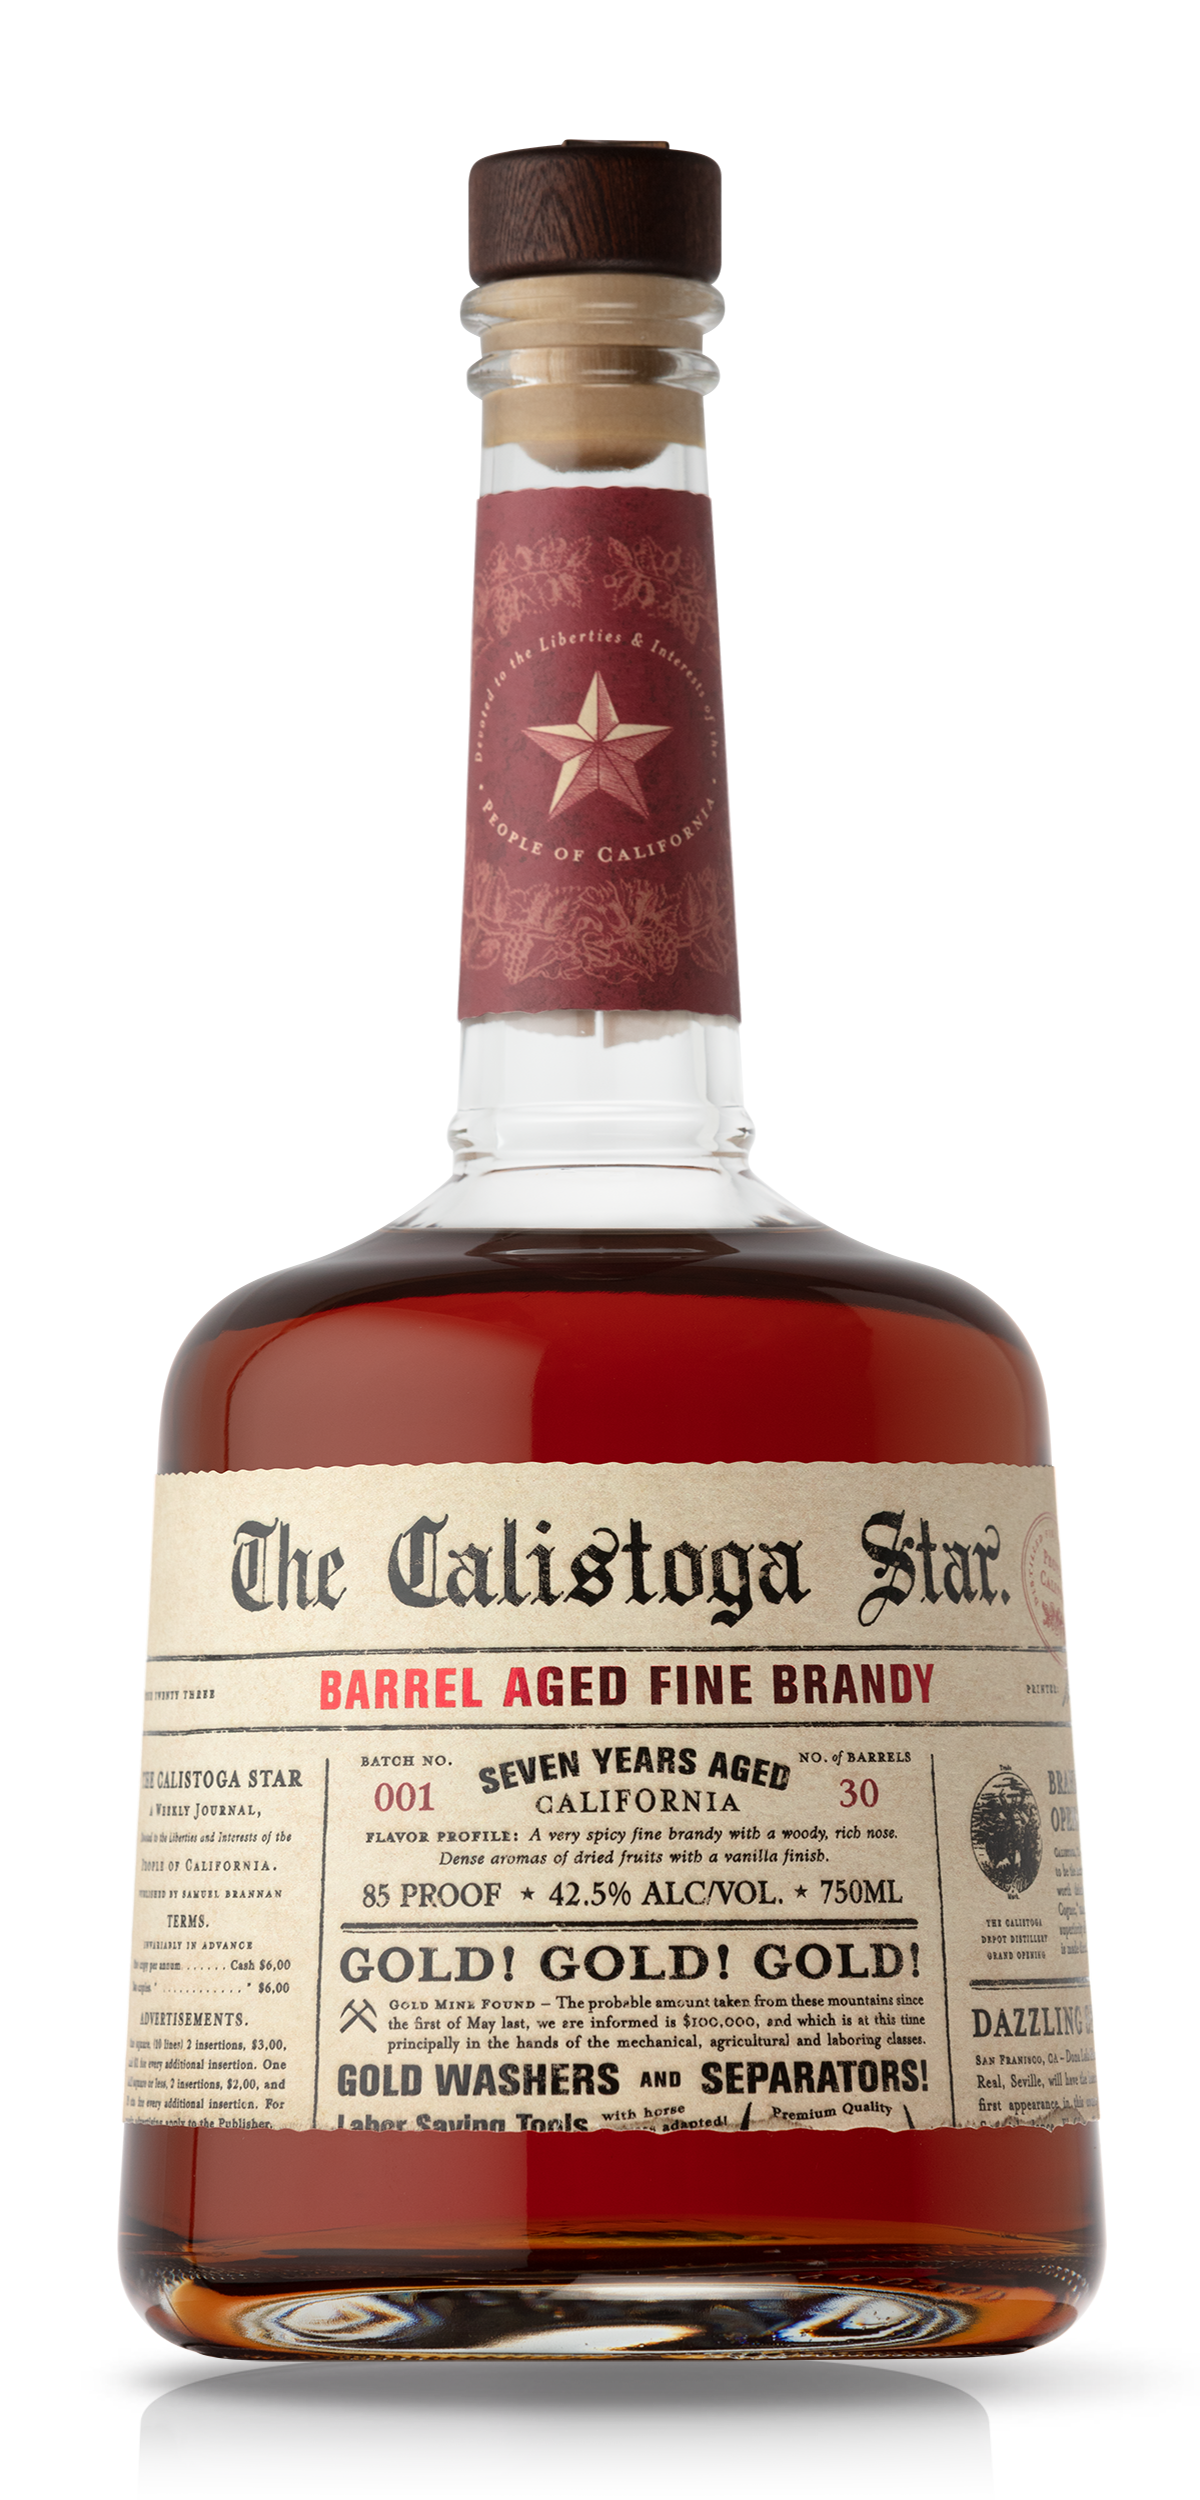 Calistoga Star Barrel-Aged Fine Brandy